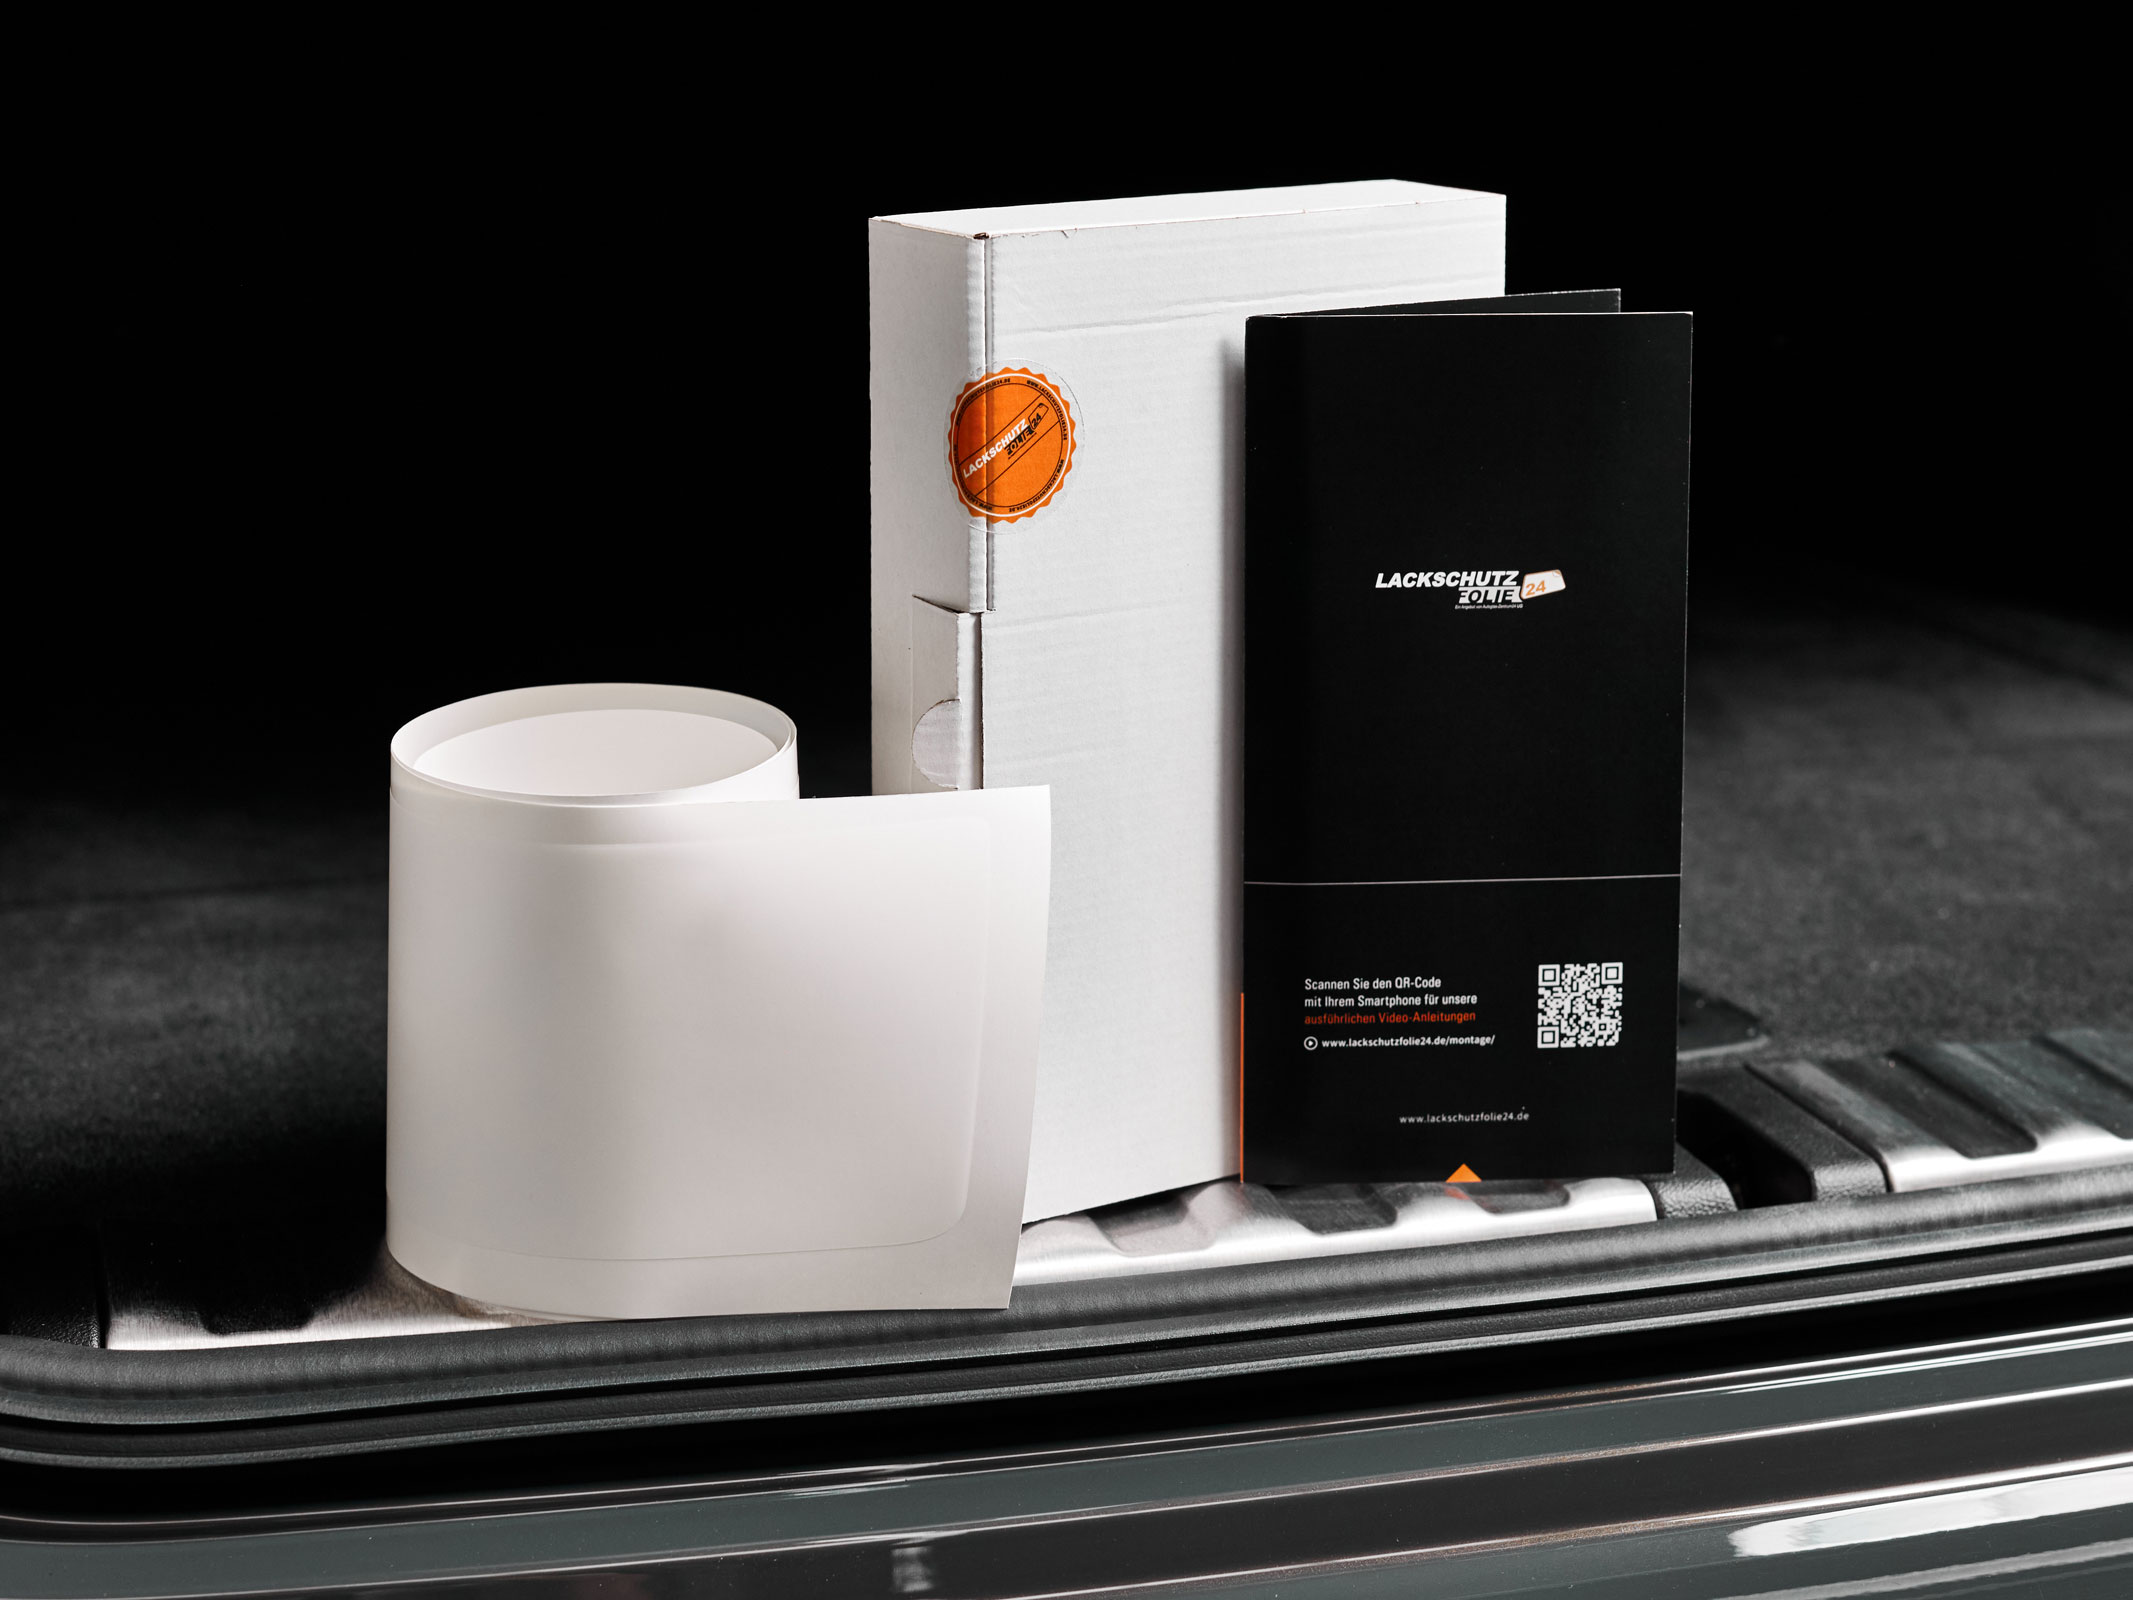 Ladekantenschutzfolie - Transparent Glatt MATT 110 µm stark  für BMW MINI Typ F55/F56, ab BJ 03/2014 + Facelift